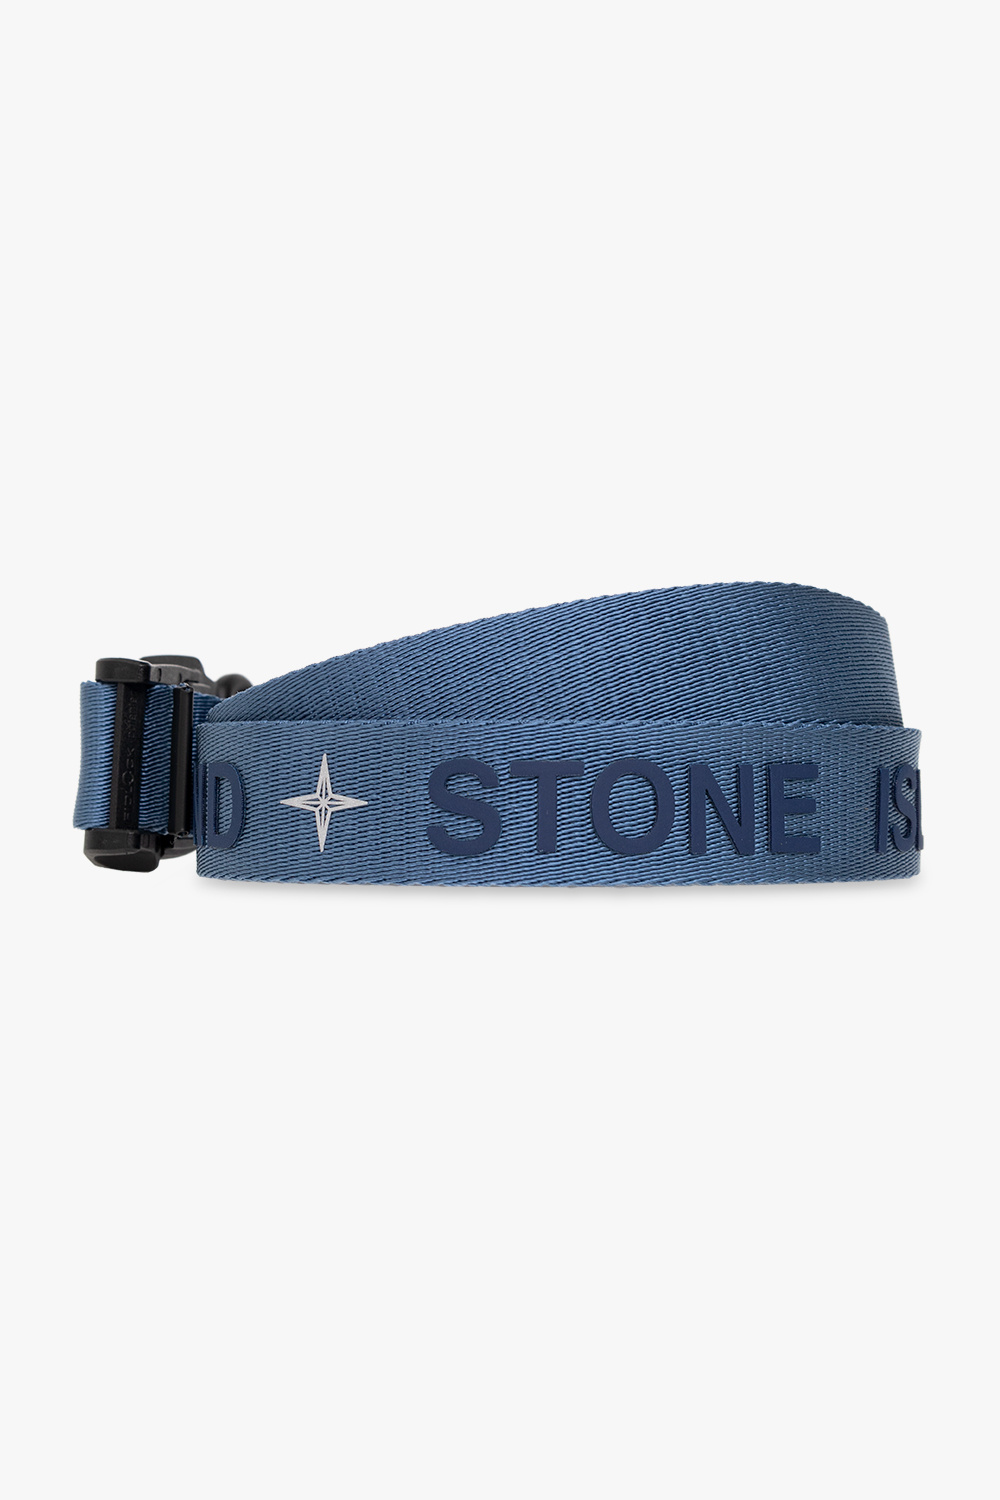 Stone Island Ties / bows